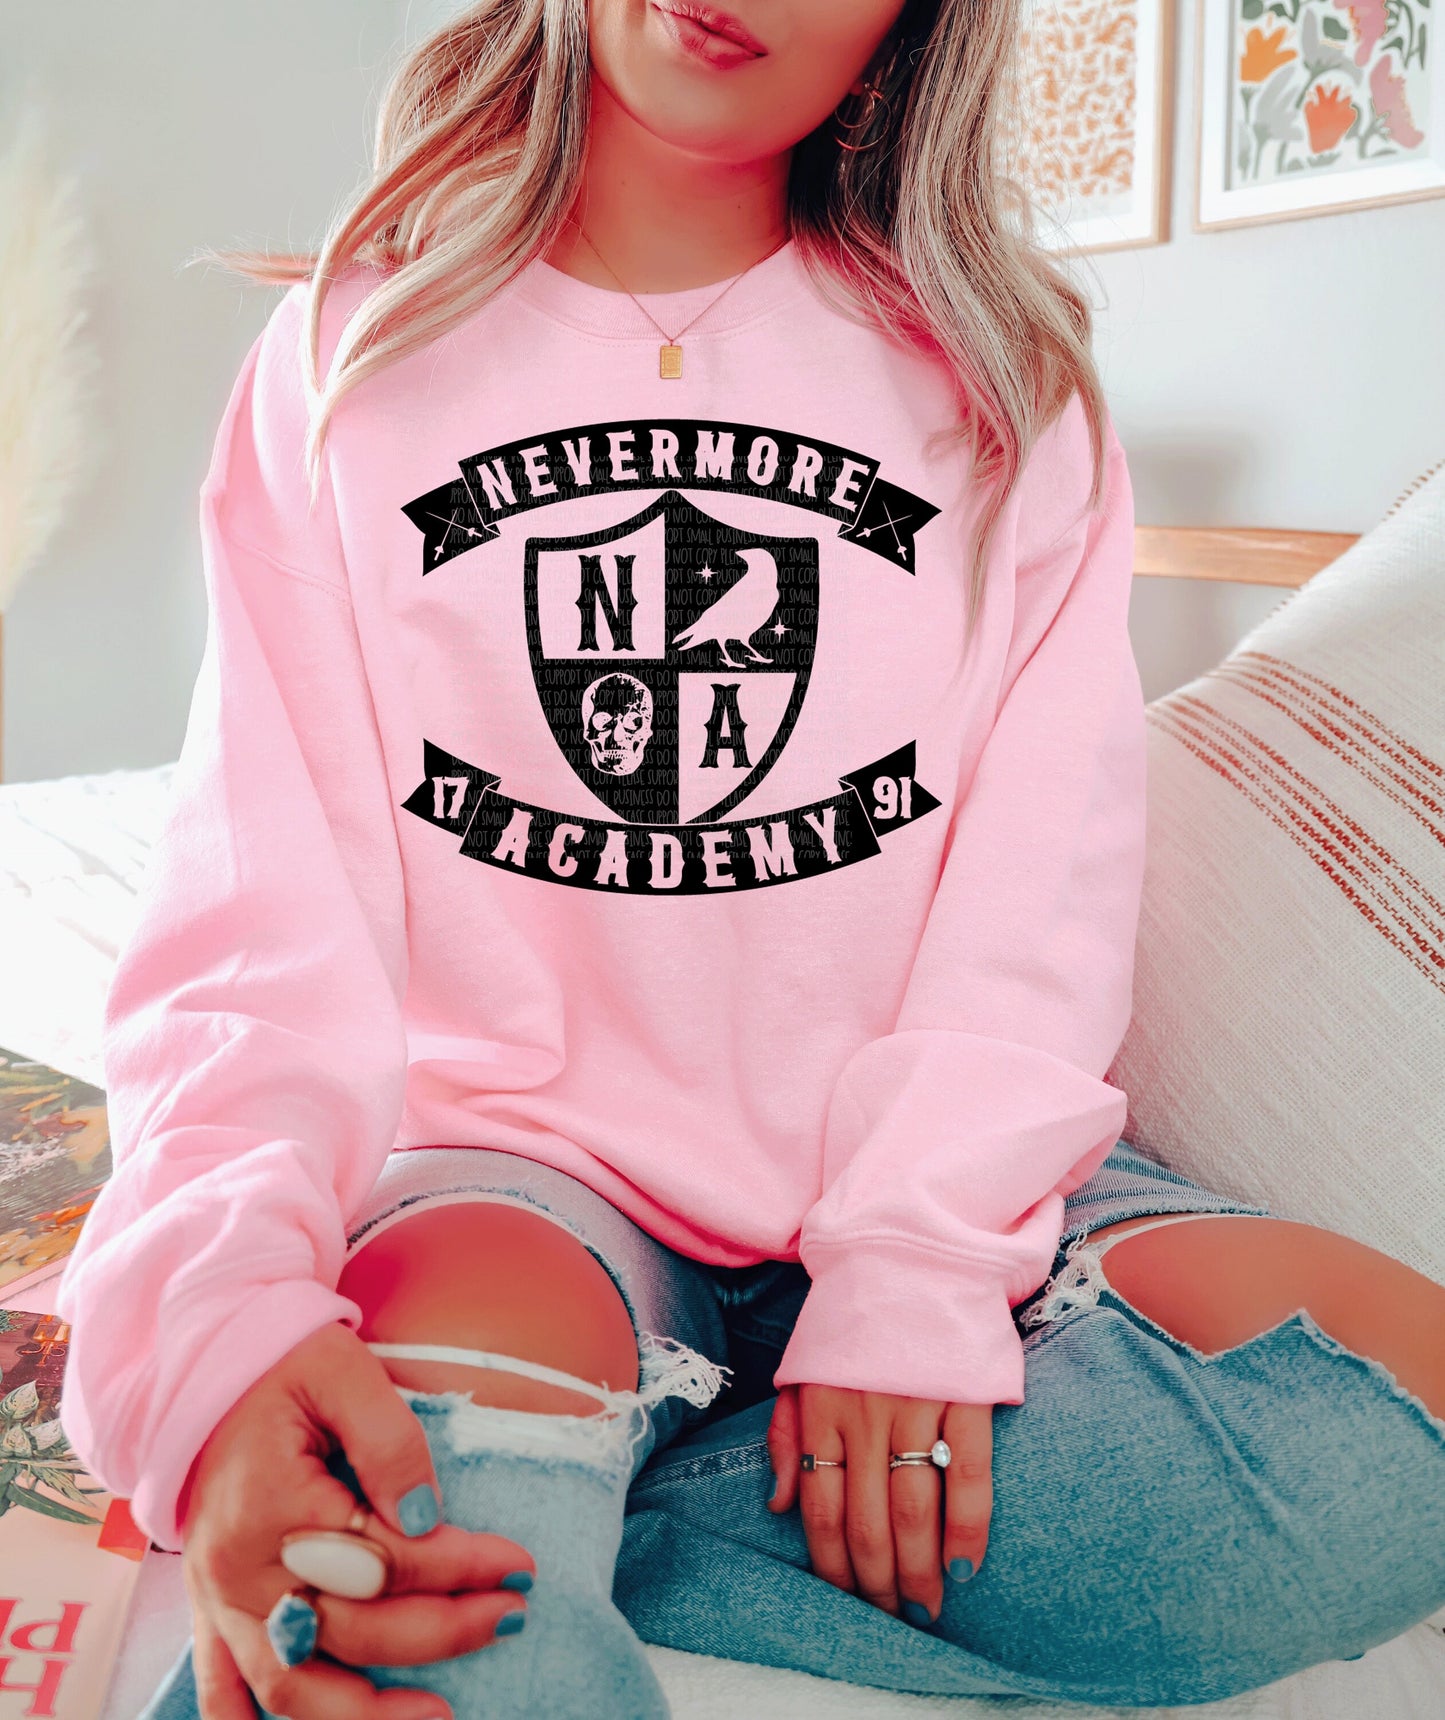 Nevermore Academy Shirt for women, Nevermore Academy sweatshirt, Wednesday shirt for women